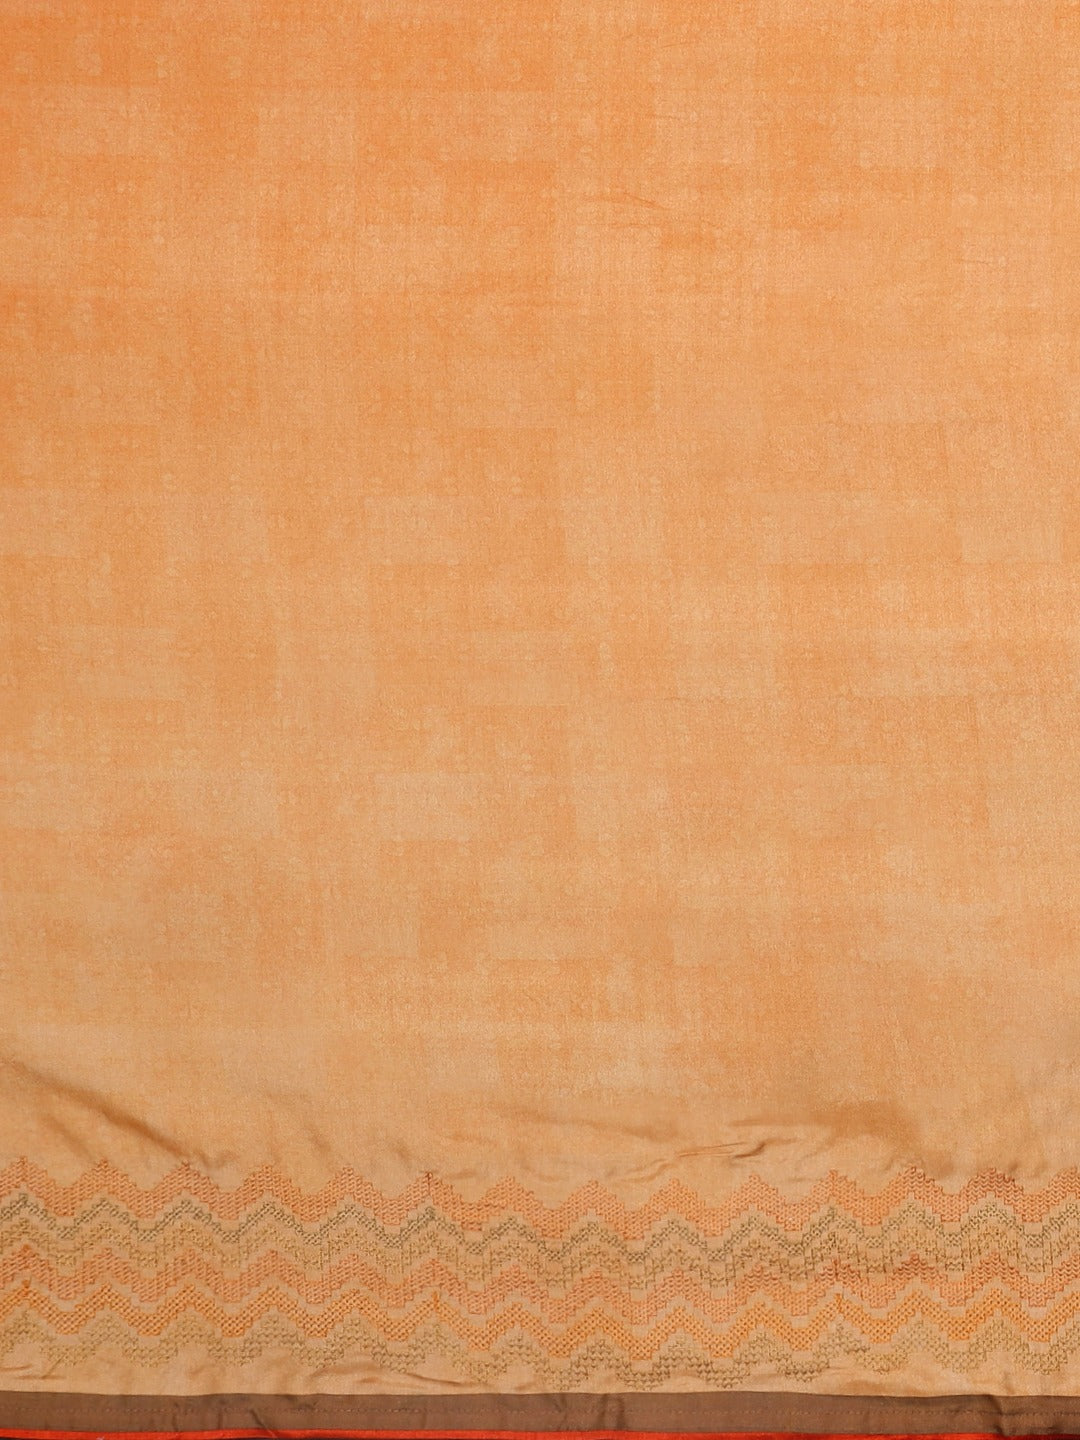 Neeru's Apricot Printed Saree With Blouse